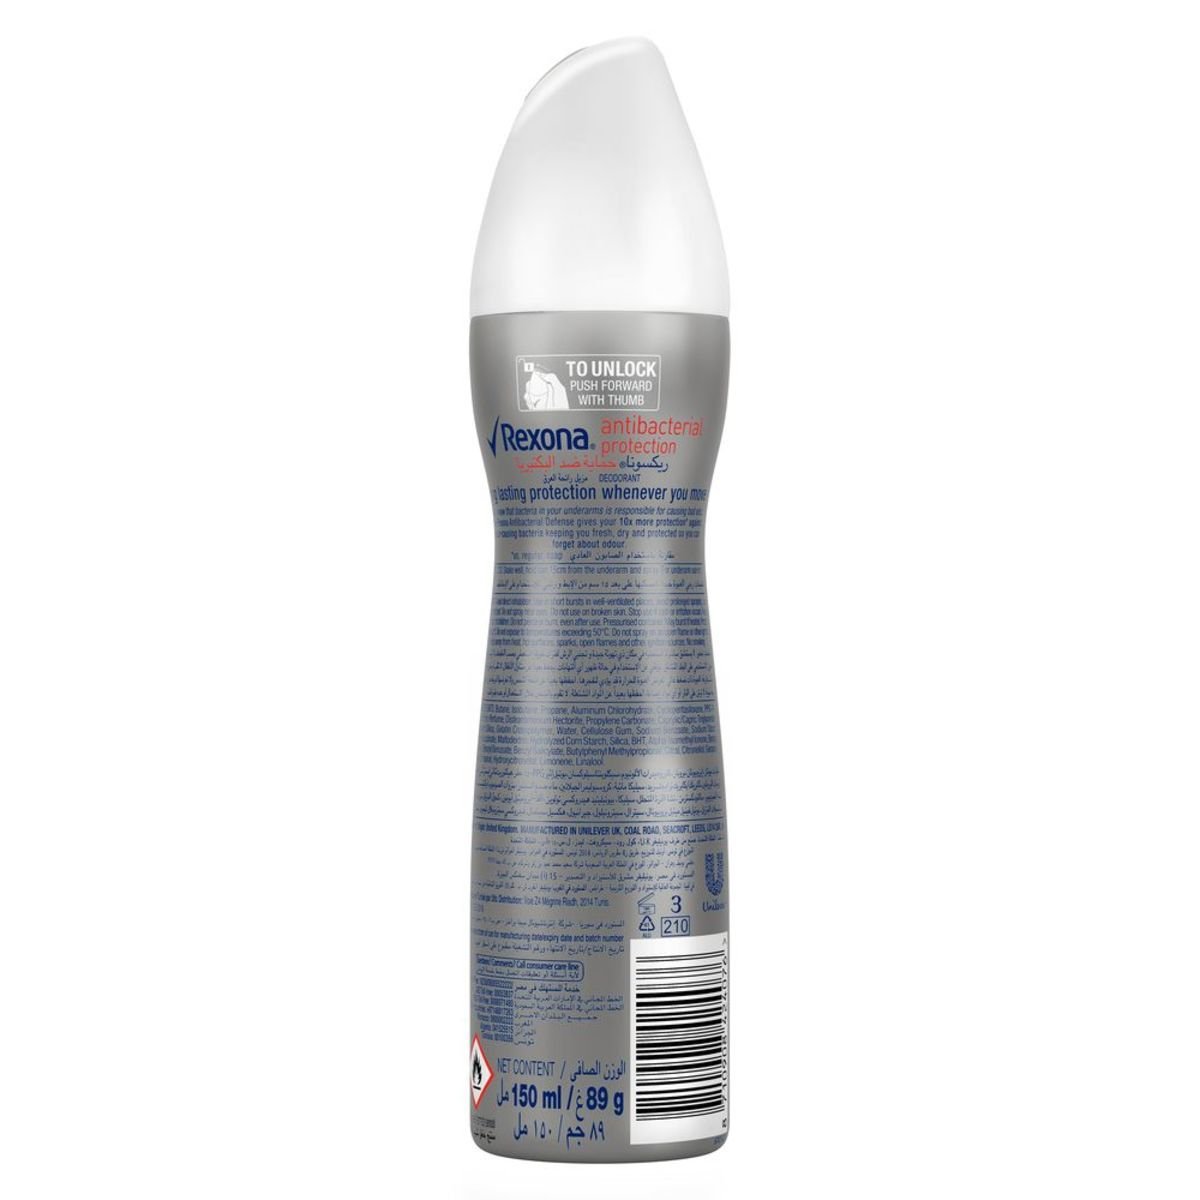 Rexona Women Antiperspirant Deodorant Anti-Bacterial, 150 ml